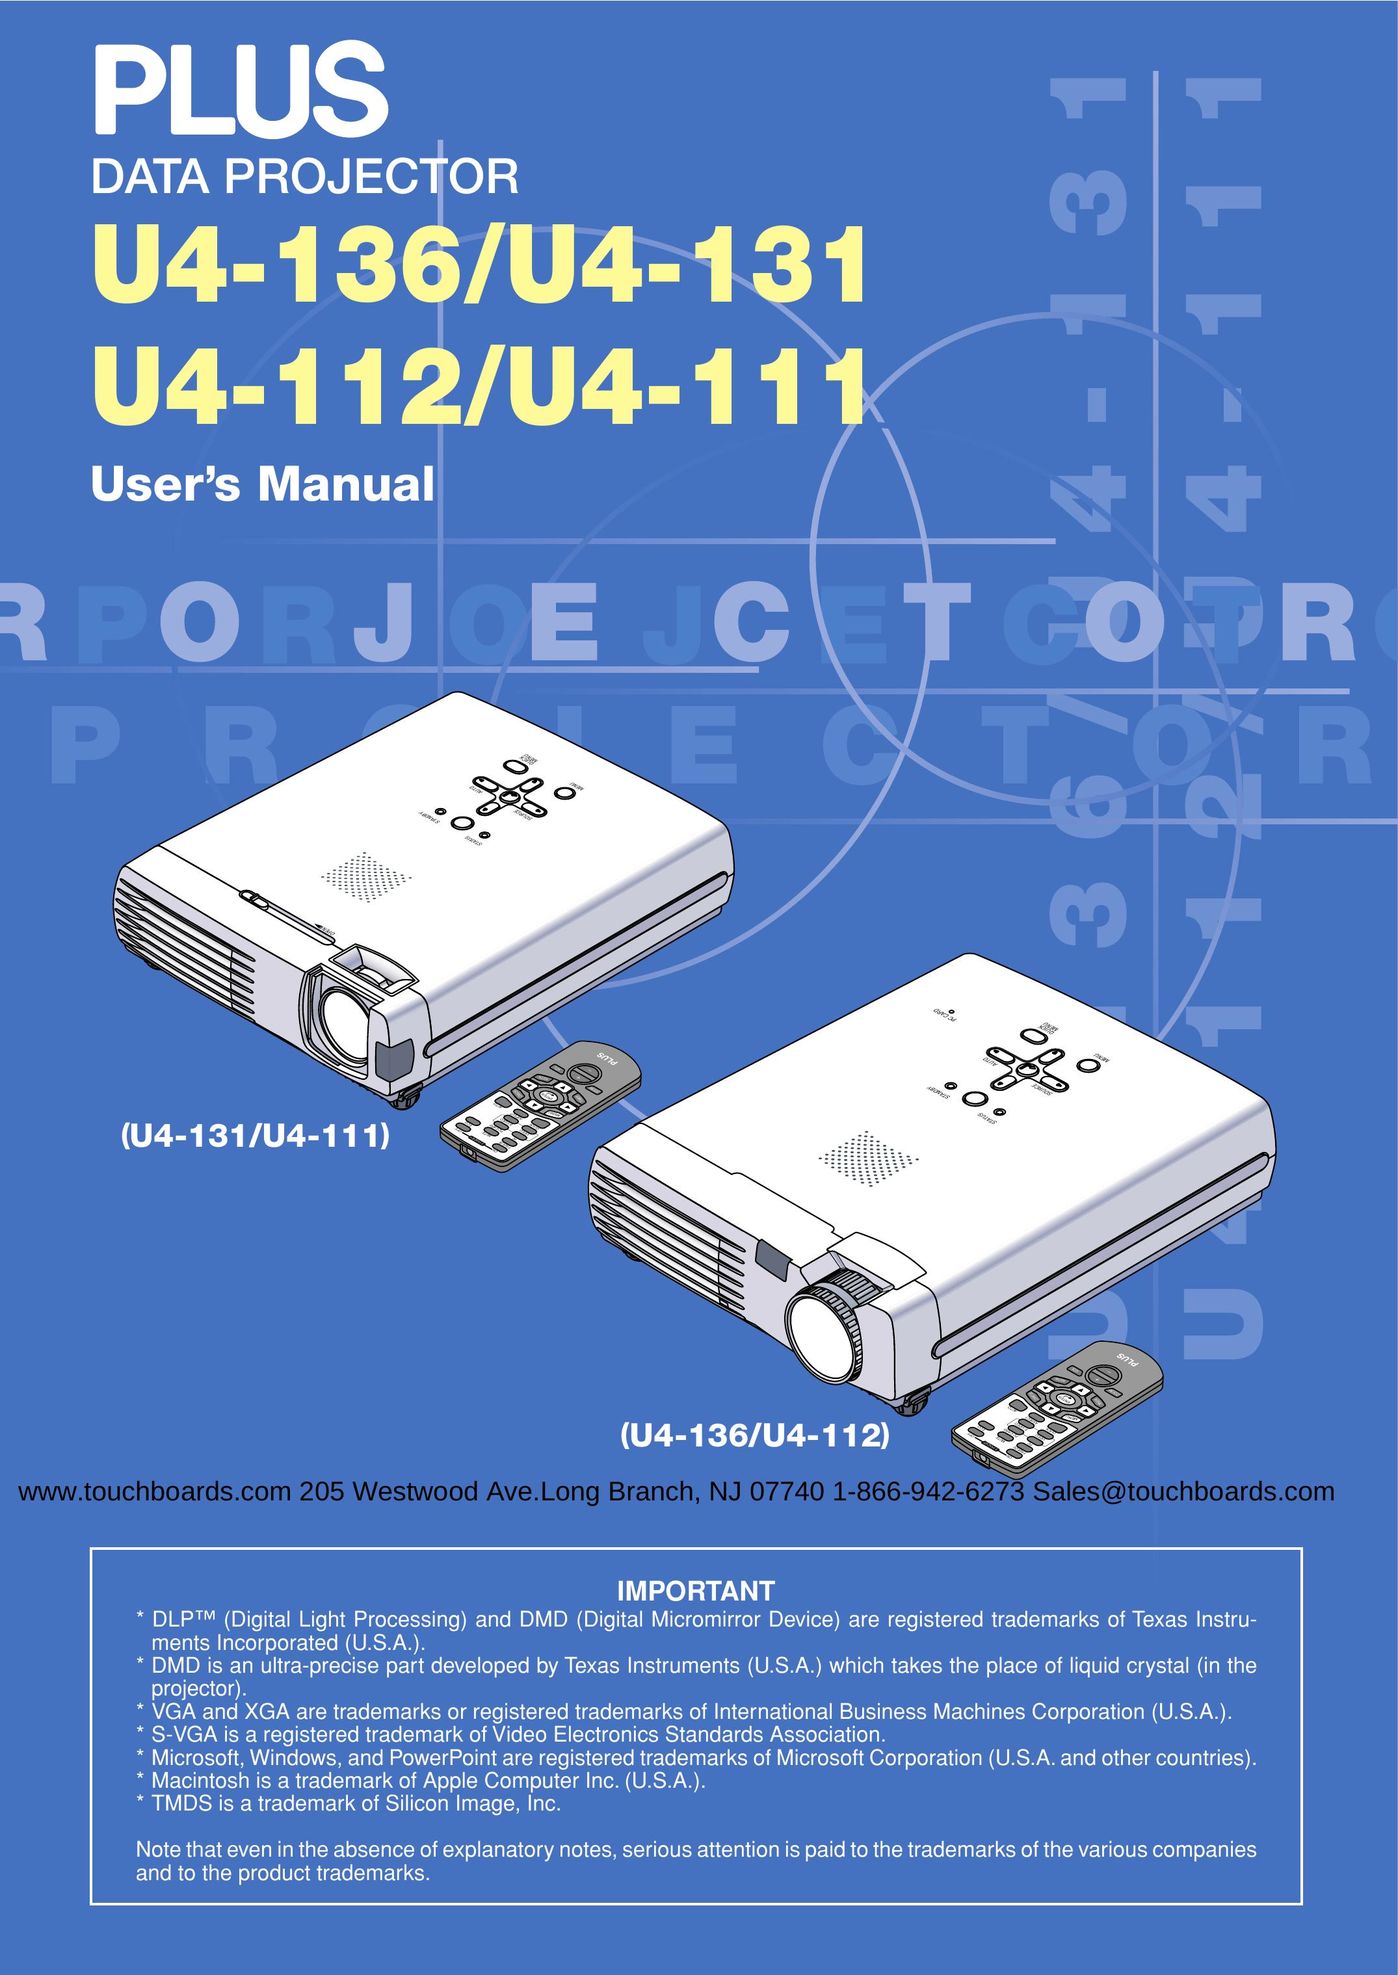 PLUS Vision U4-136 Projector User Manual